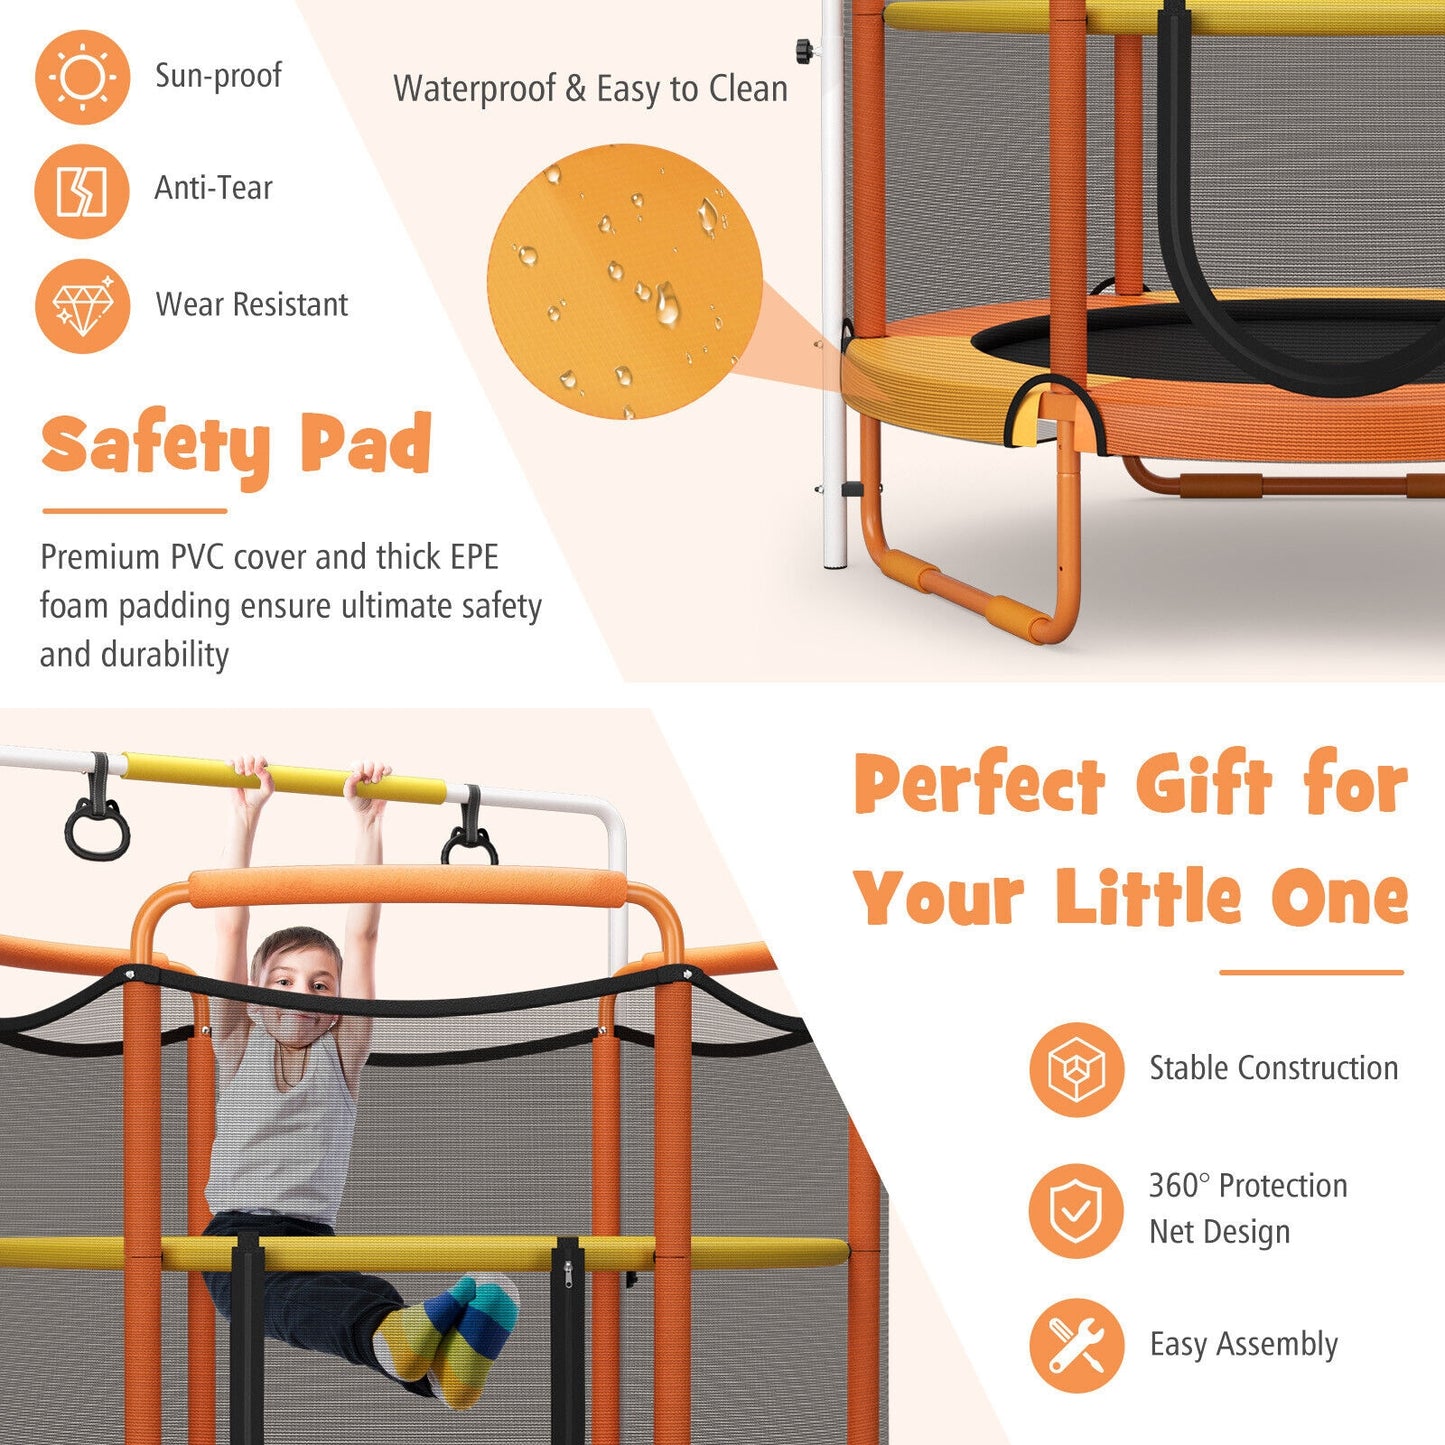 5 Feet Kids 3-in-1 Game Trampoline with Enclosure Net Spring Pad-Orange